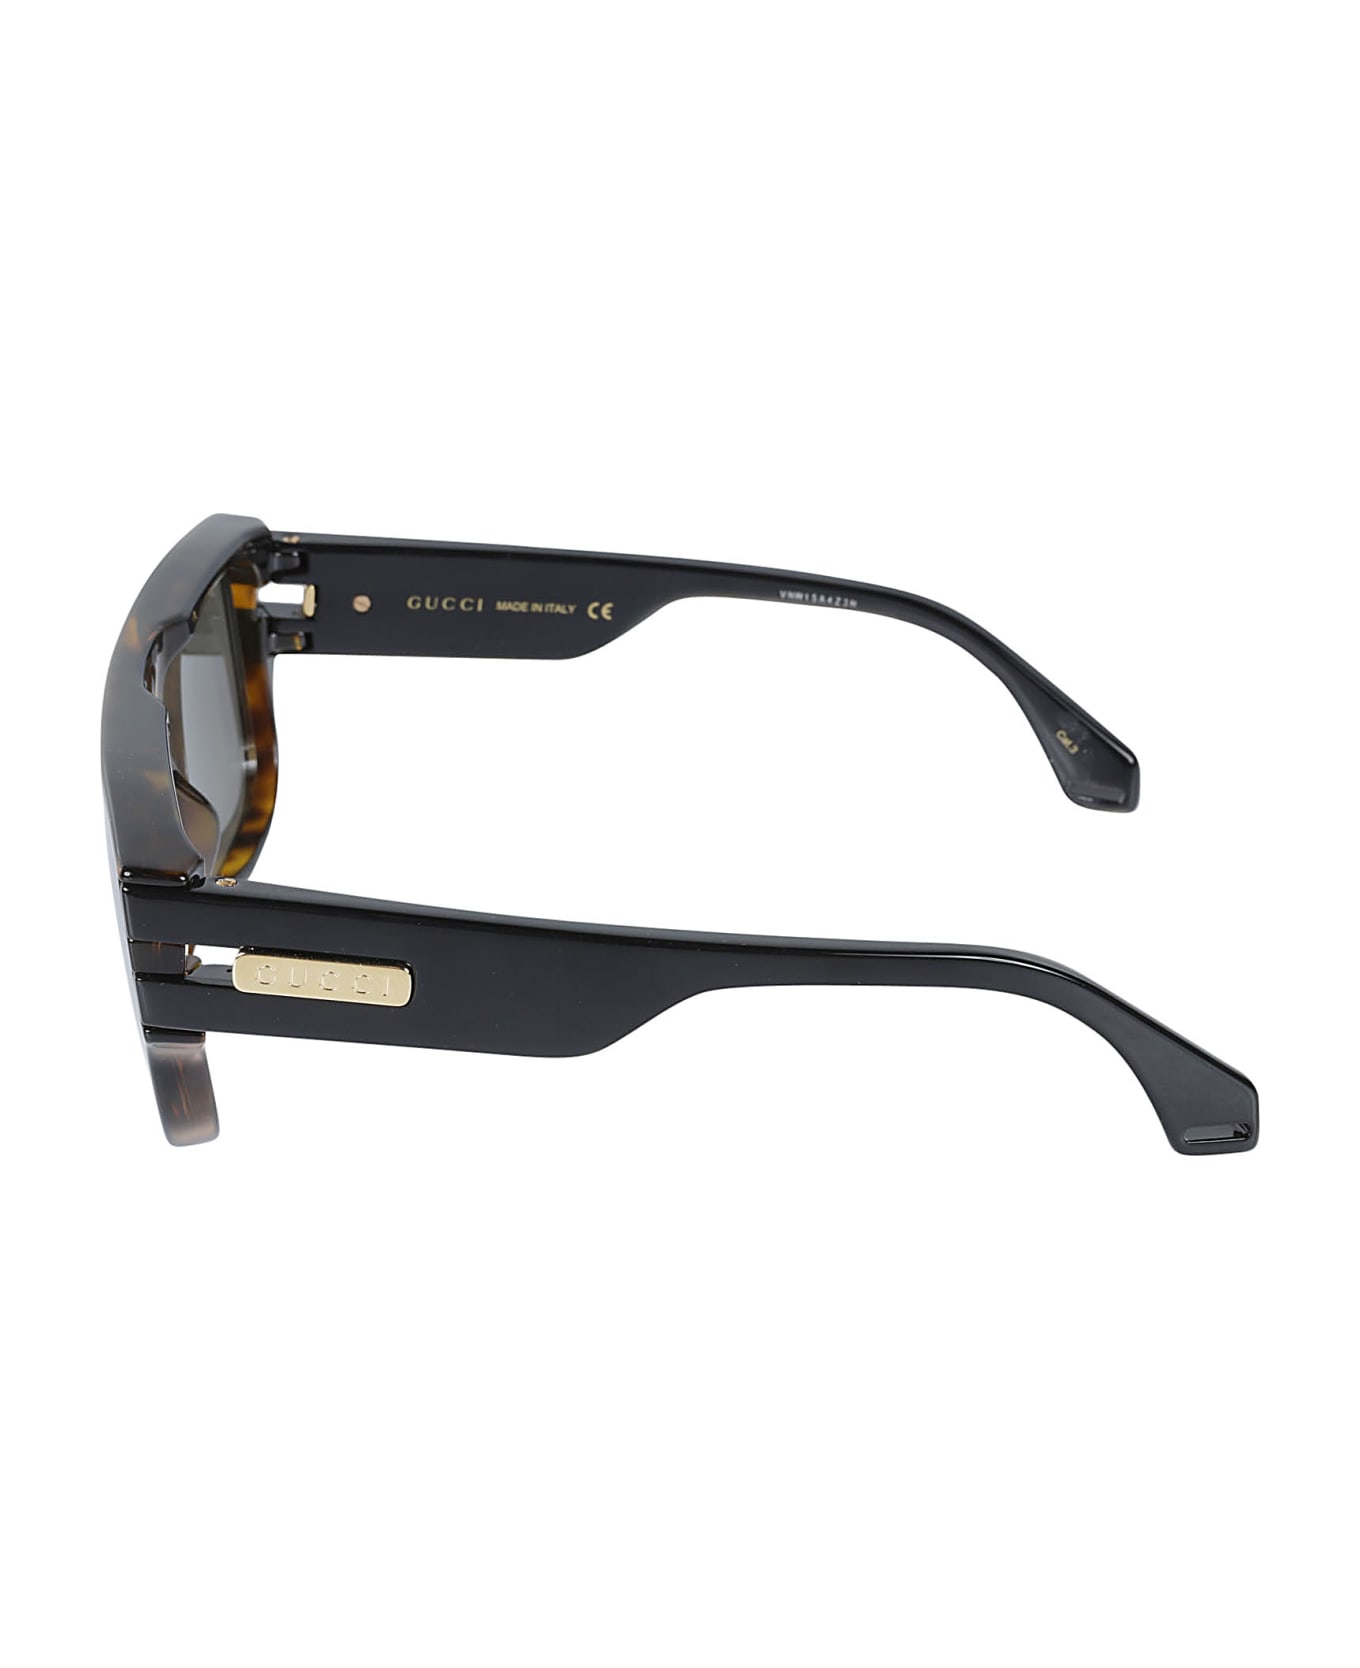 Gucci Eyewear Rectangle Retro Sunglasses - 004 havana black silver